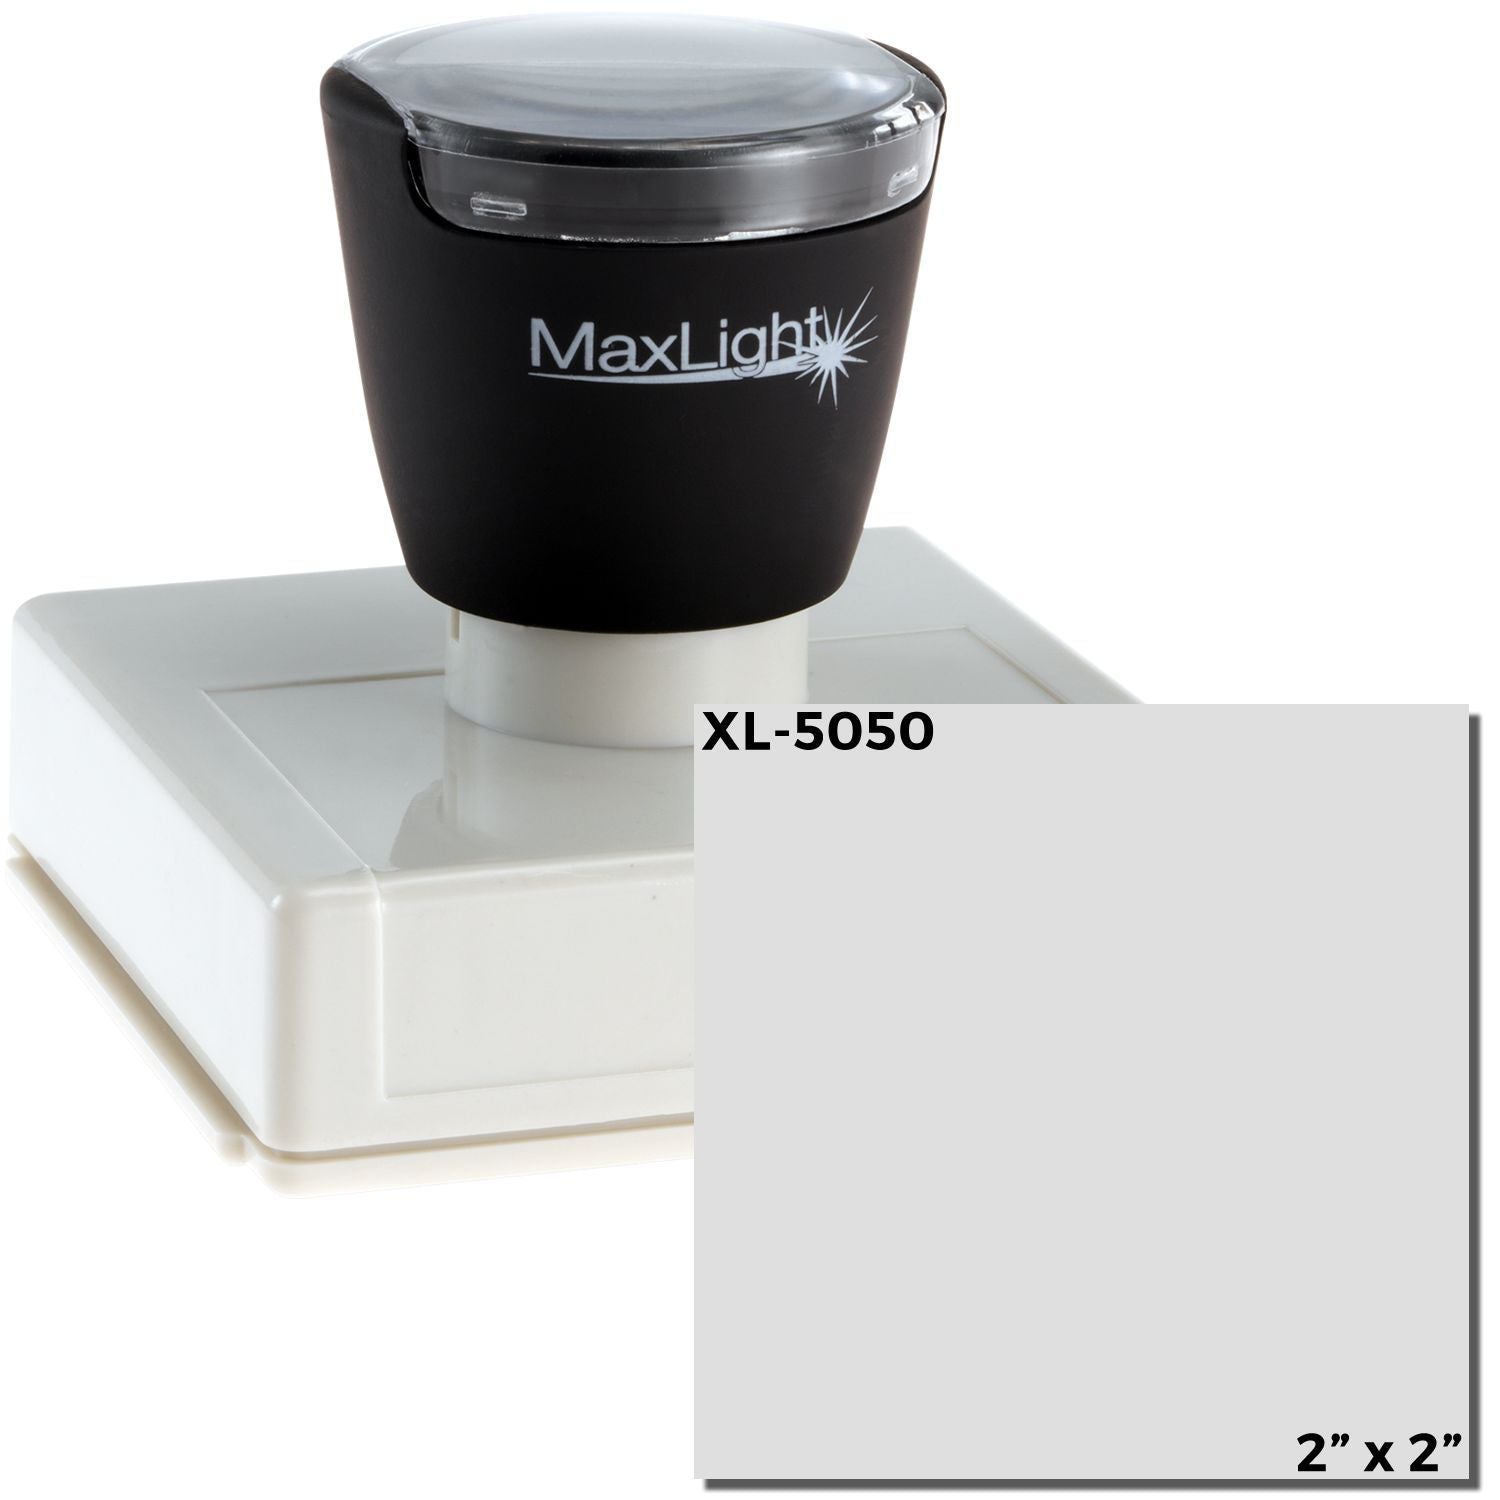 Maxlight Xl2 5050 Pre Inked Stamp 2 X 2 Main Image